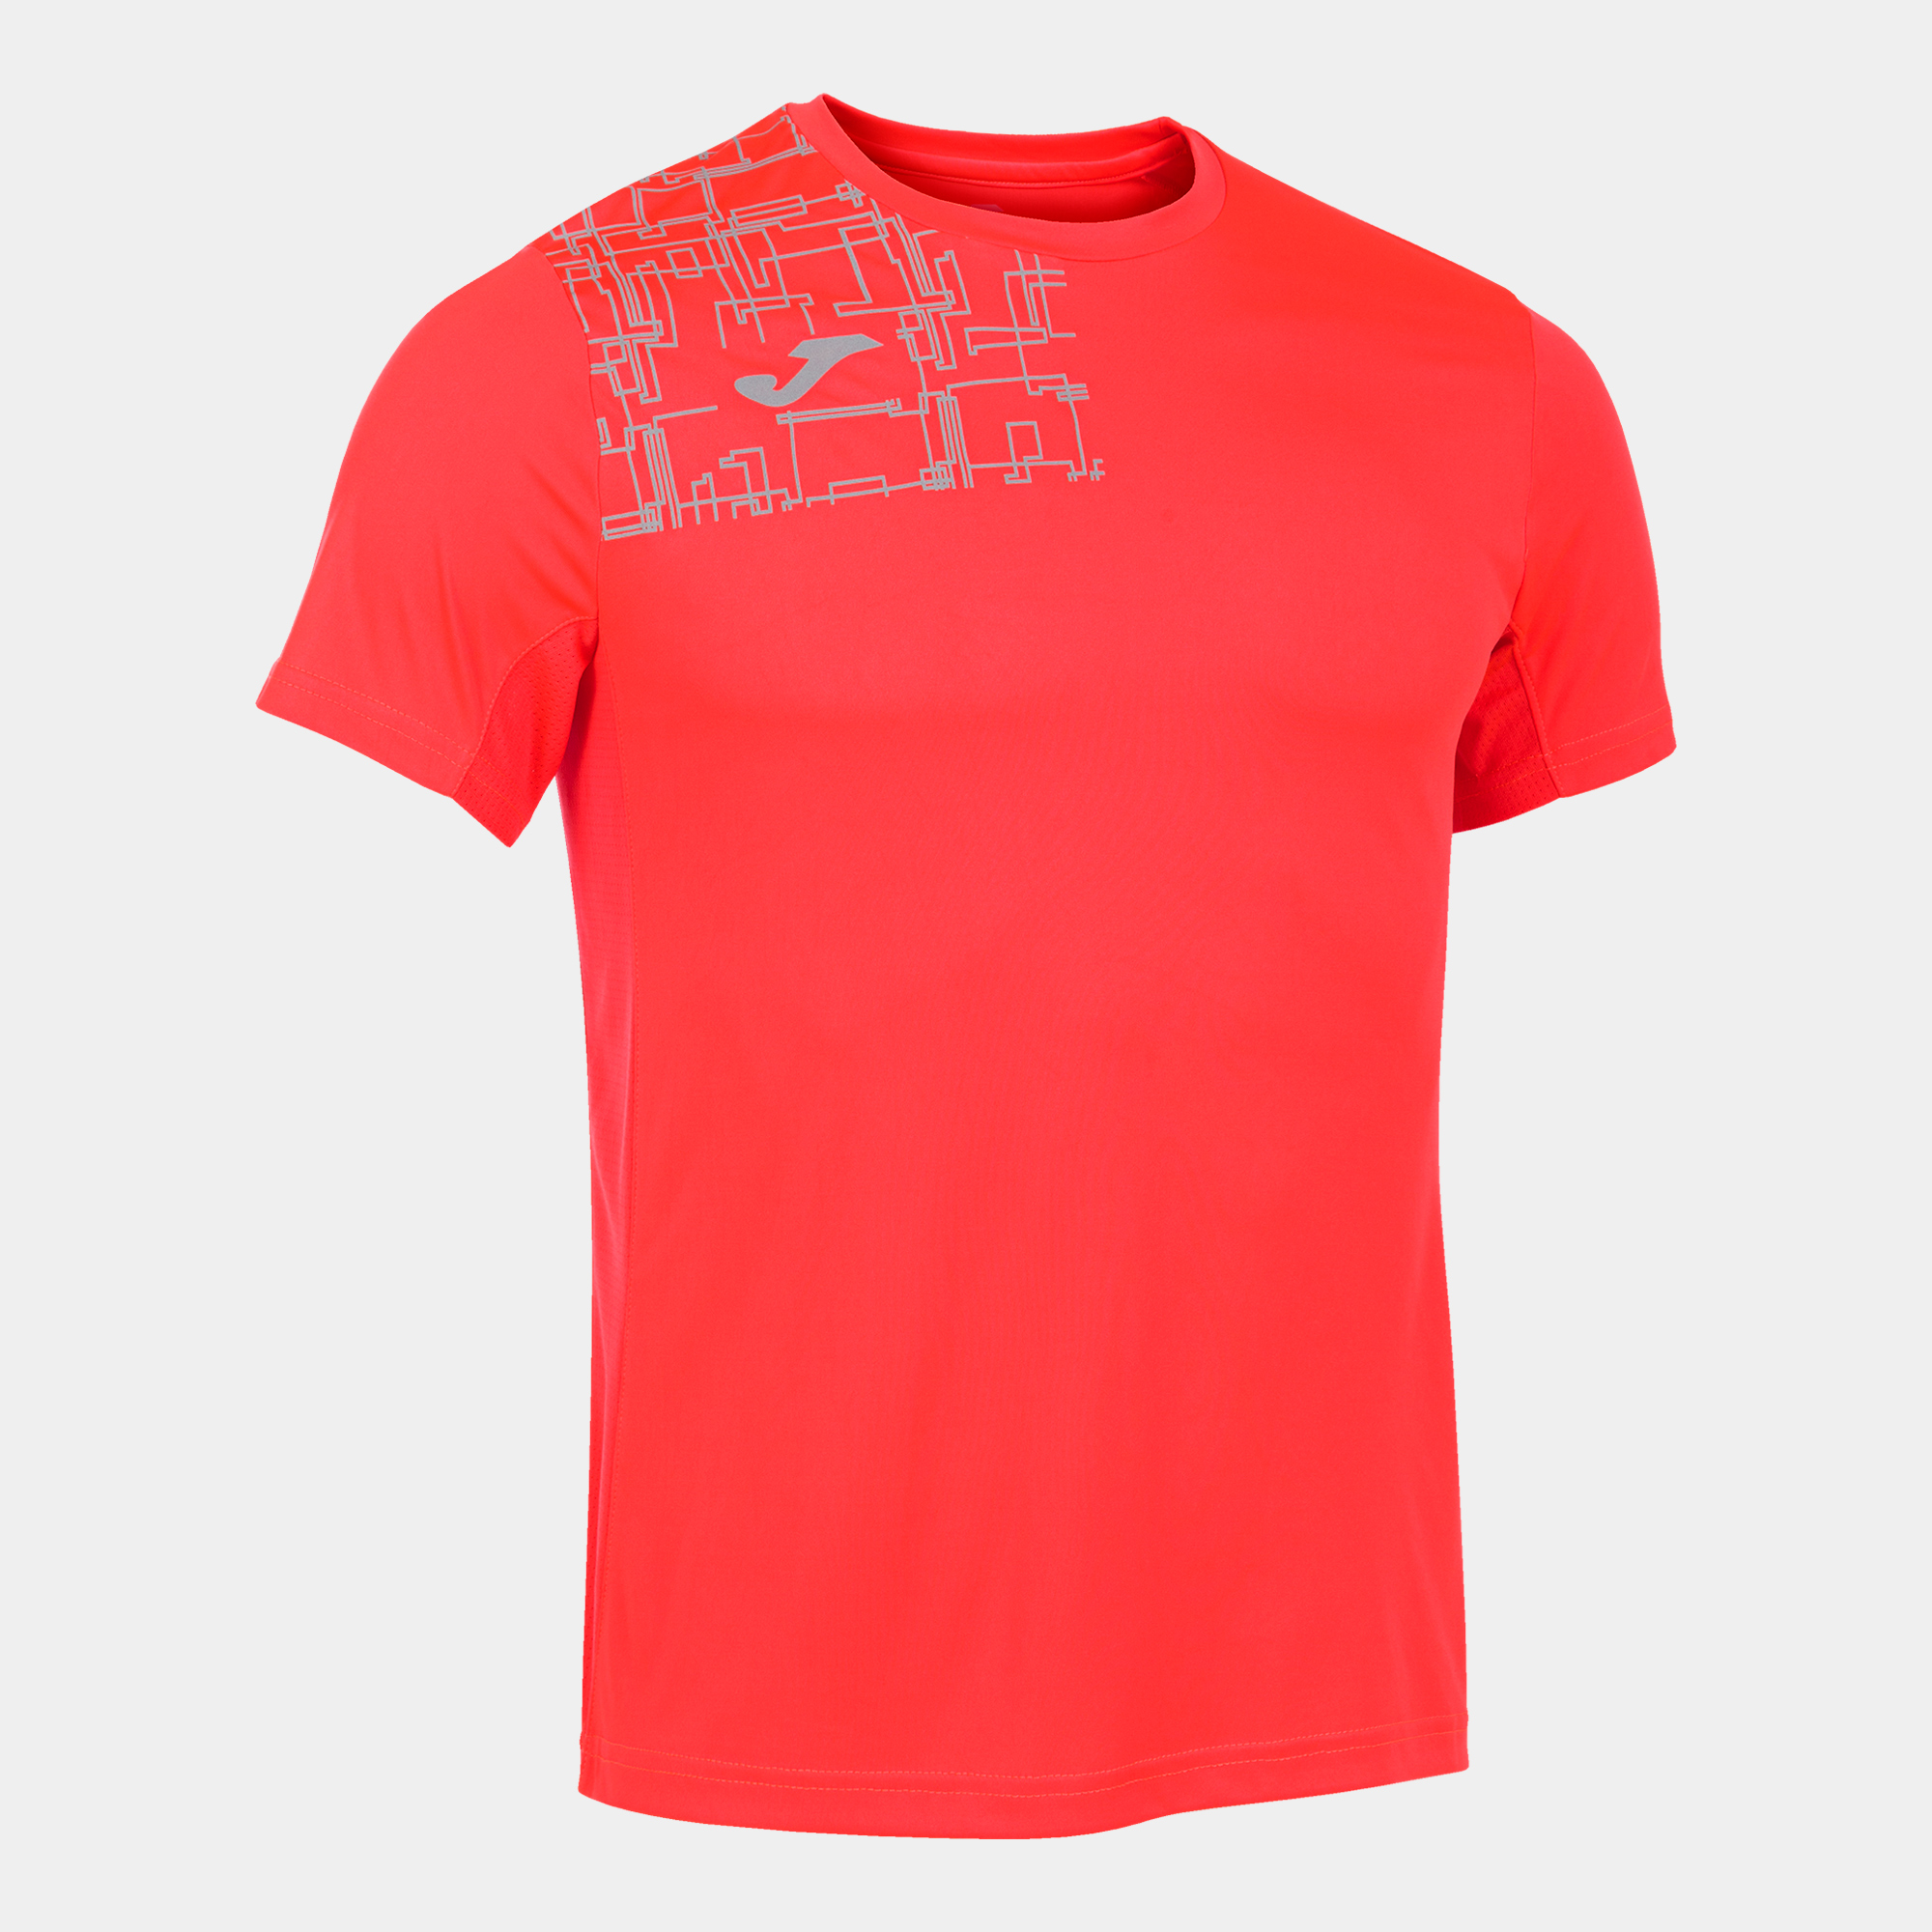 Camiseta tirantes hombre Elite IX rojo